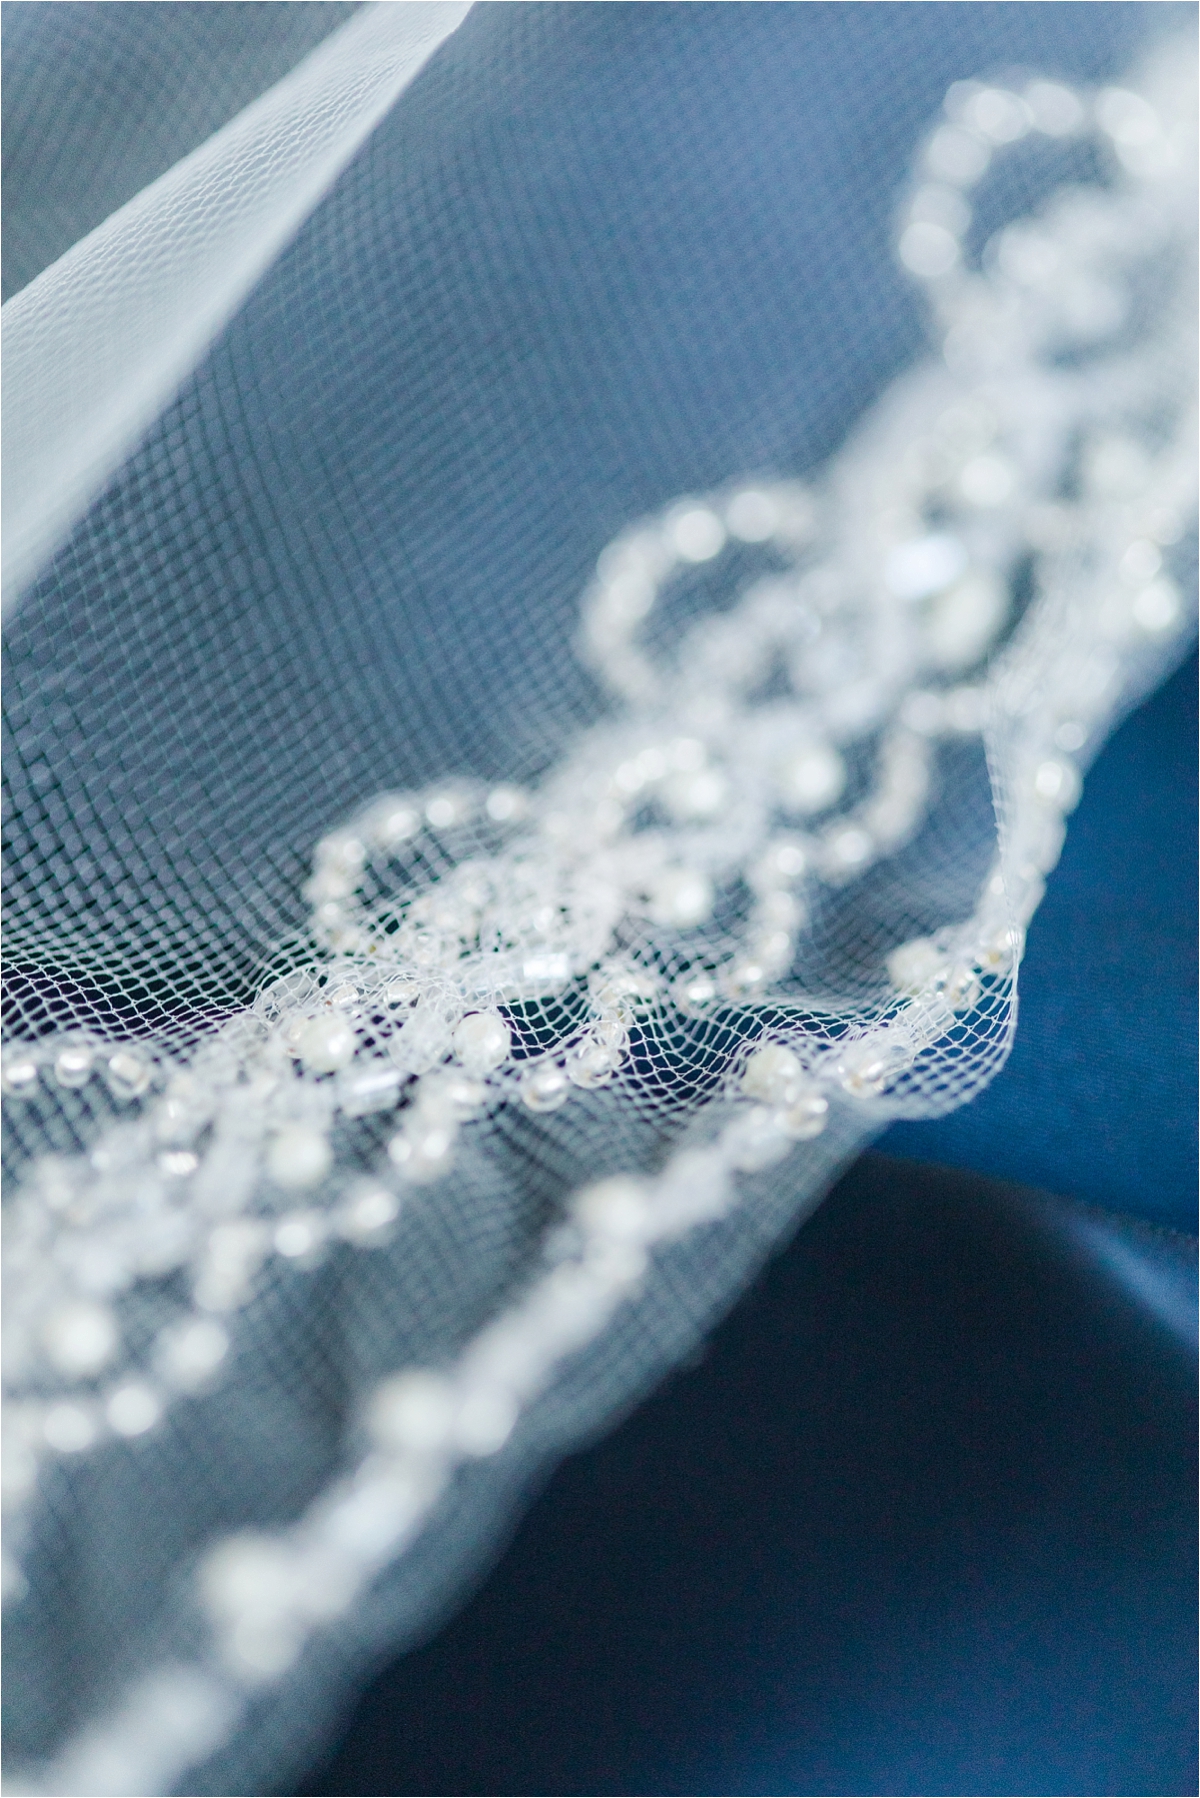 veil-wedding-lace-pearls-details-navy-wedding